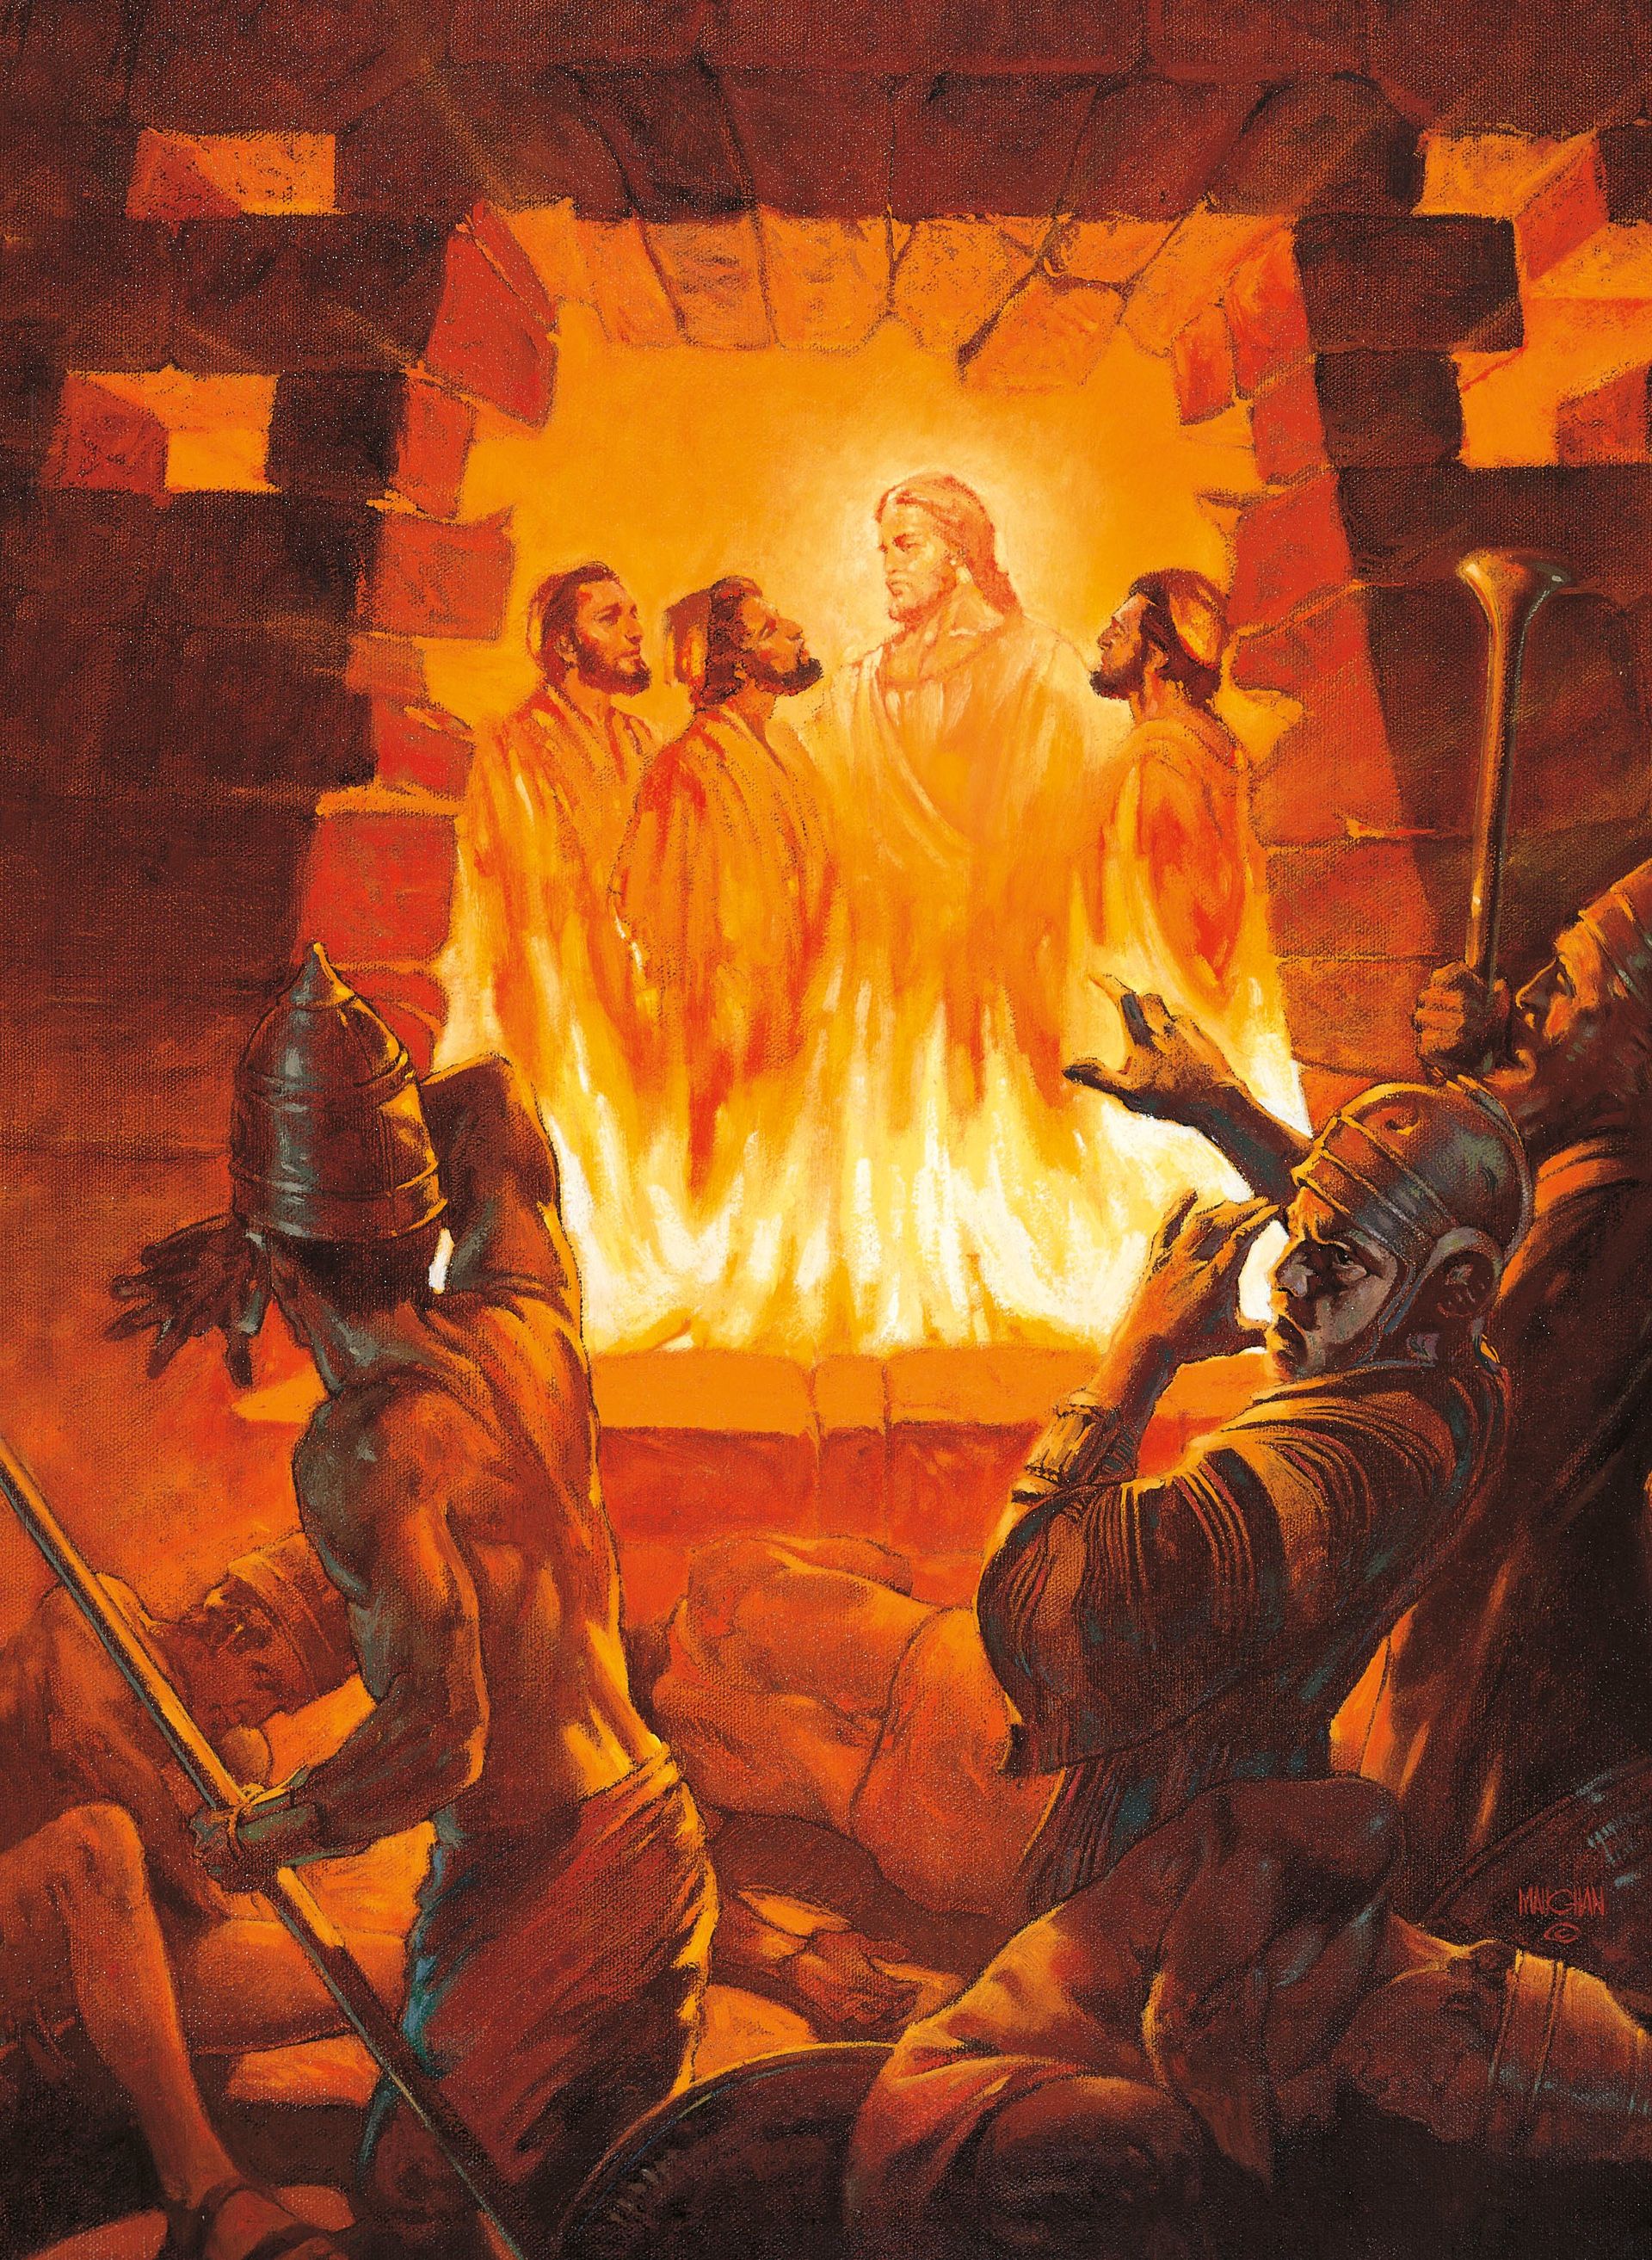 Three Men in the Fiery Furnace (Shadrach, Meshach, and Abednego in the Fiery Furnace), by William Maughan (62093); GAK 116; GAB 25; Primary manual 1-56; Primary manual 6-14; Daniel 3; Alma 36:3